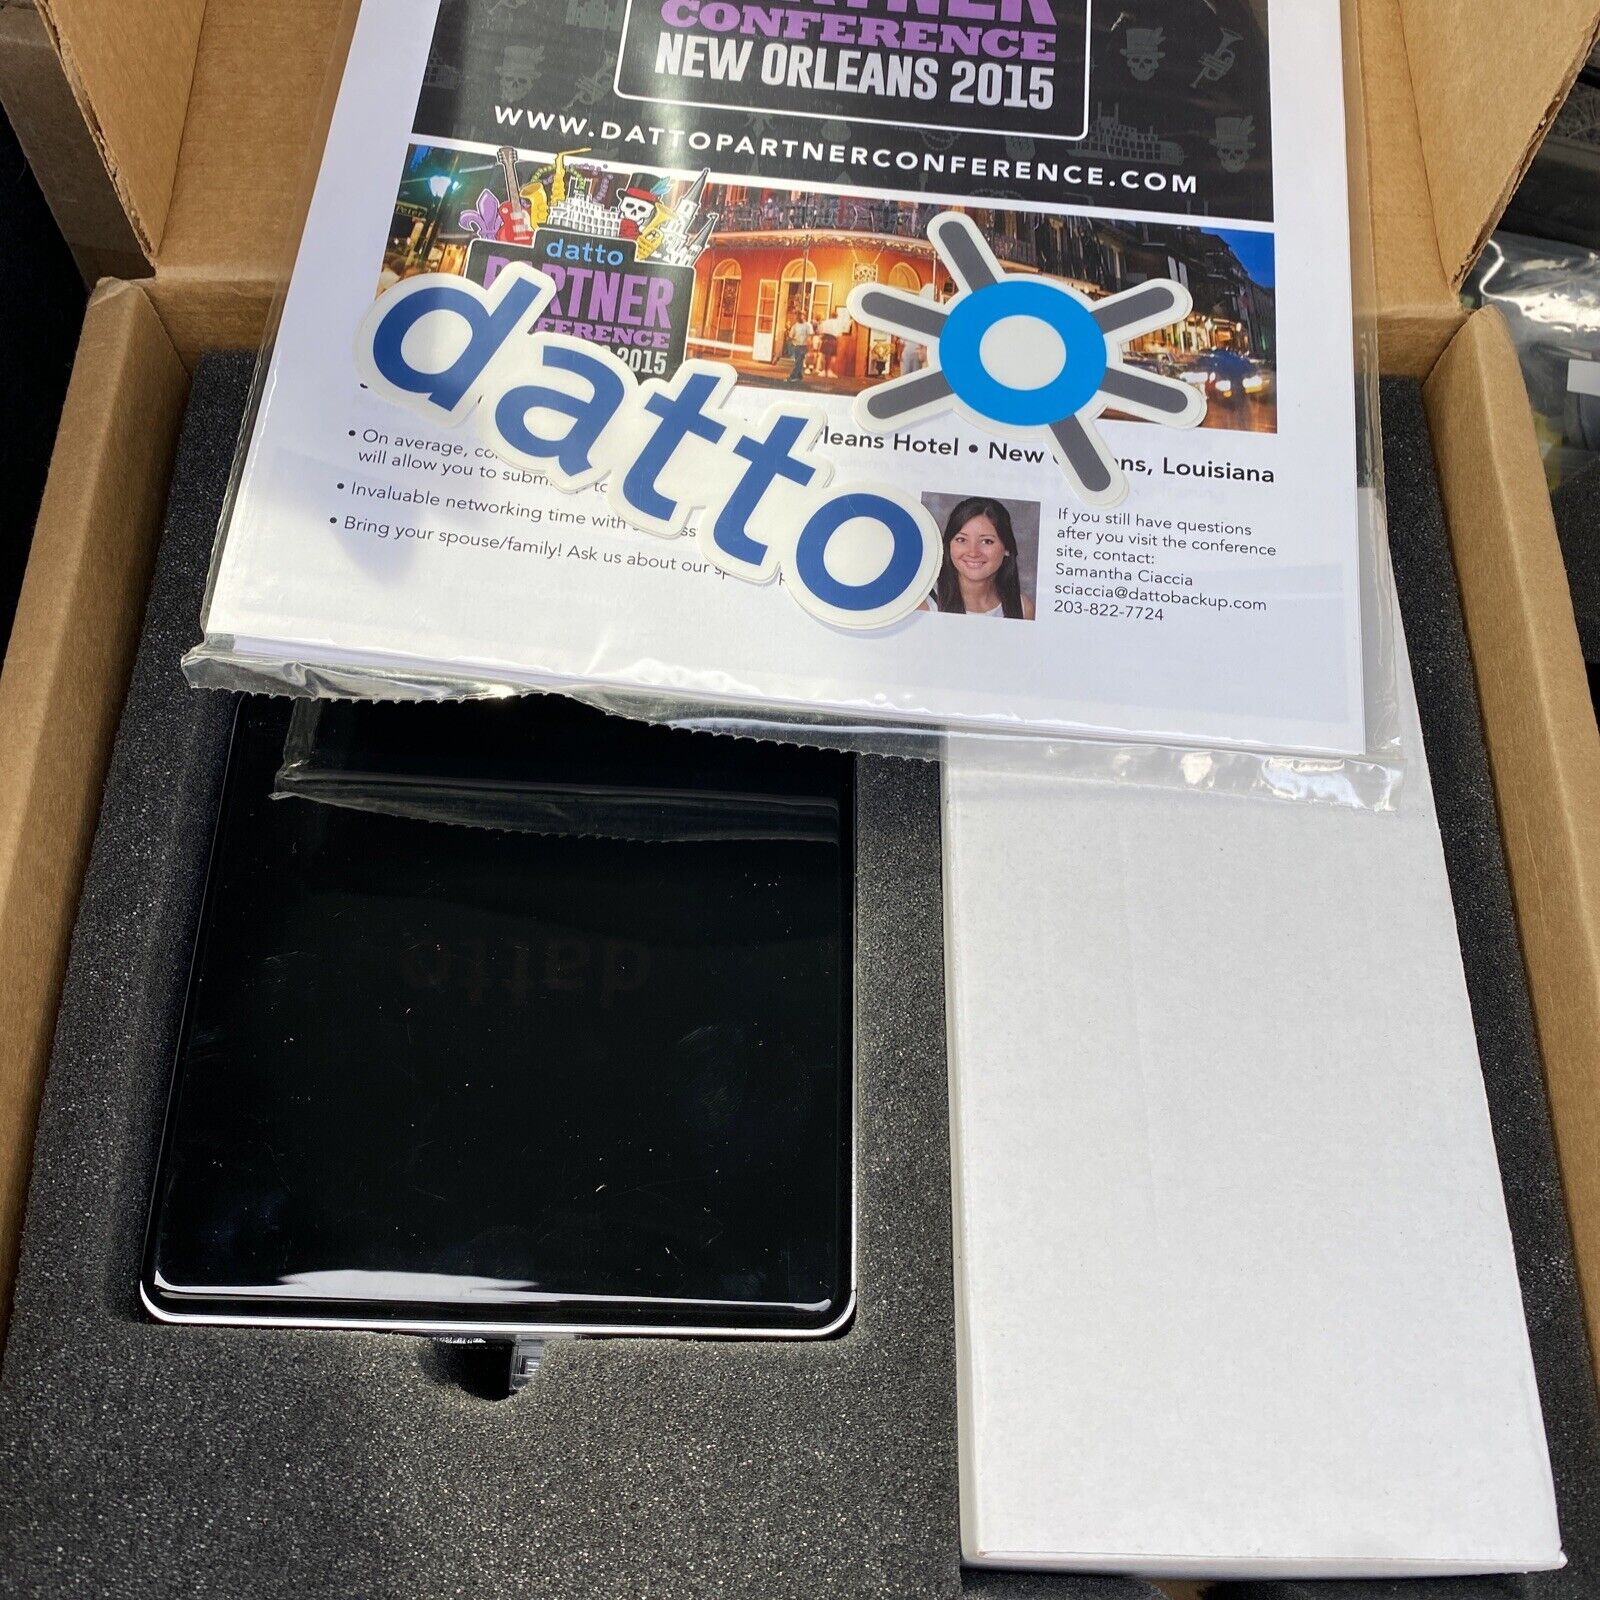 DATTO-1000 Micro Server 8GB RAM